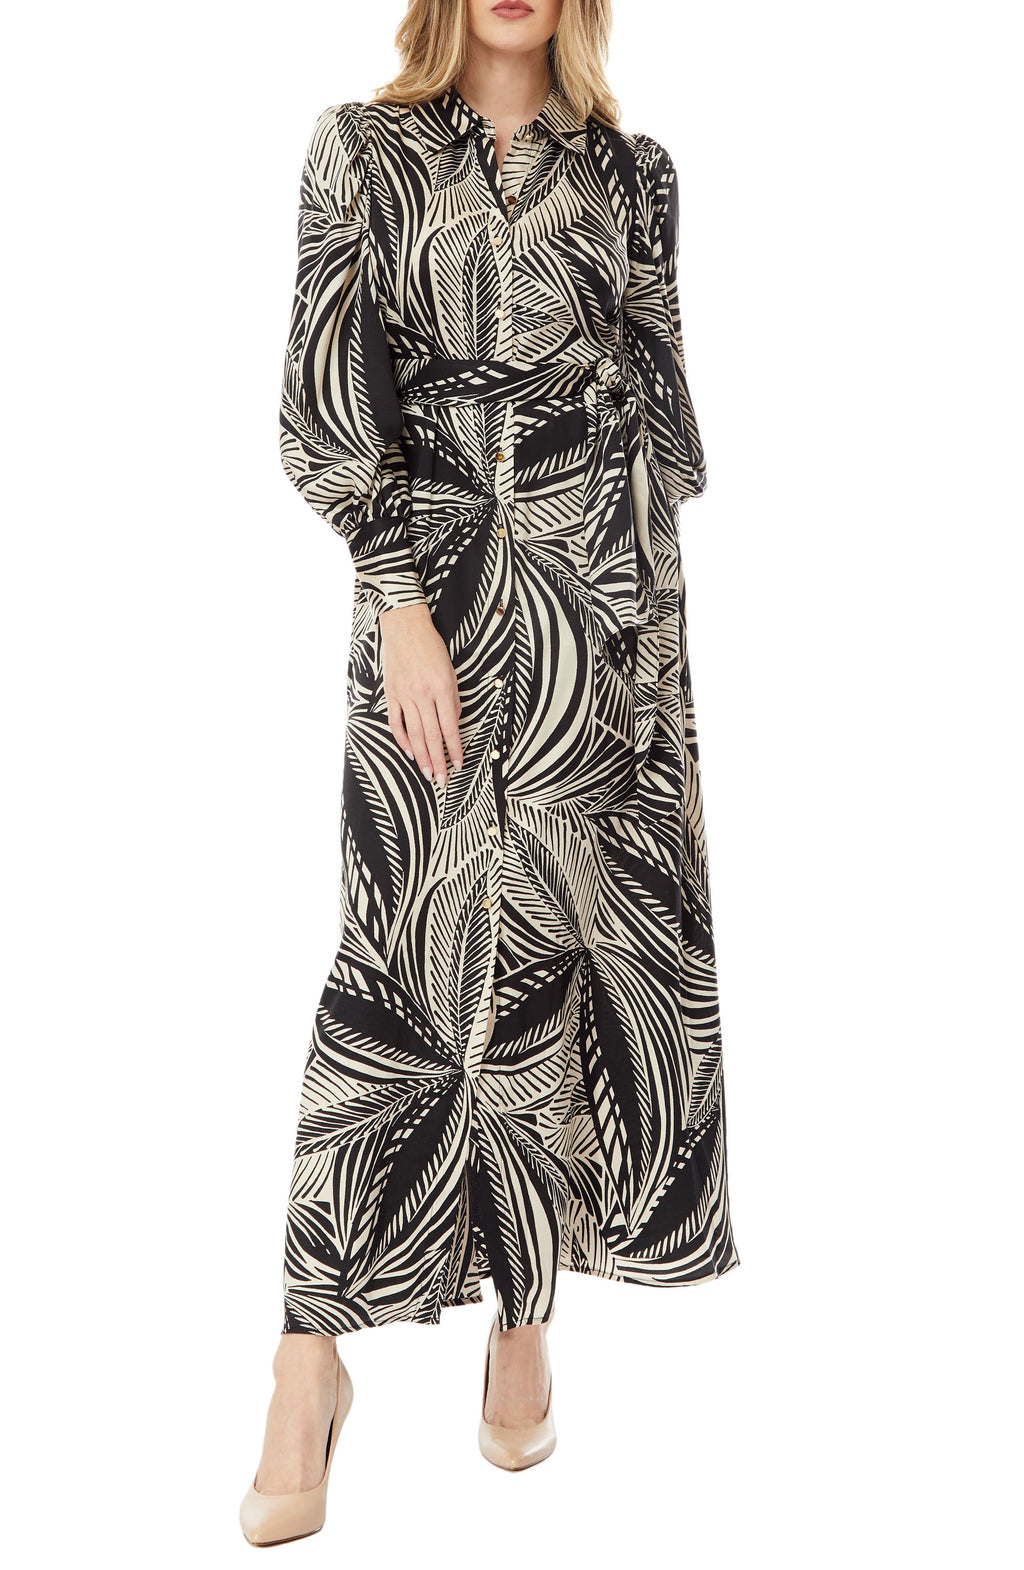 BY DESIGN Haiti Long Sleeve Maxi Dress, Main, color, Palm Print